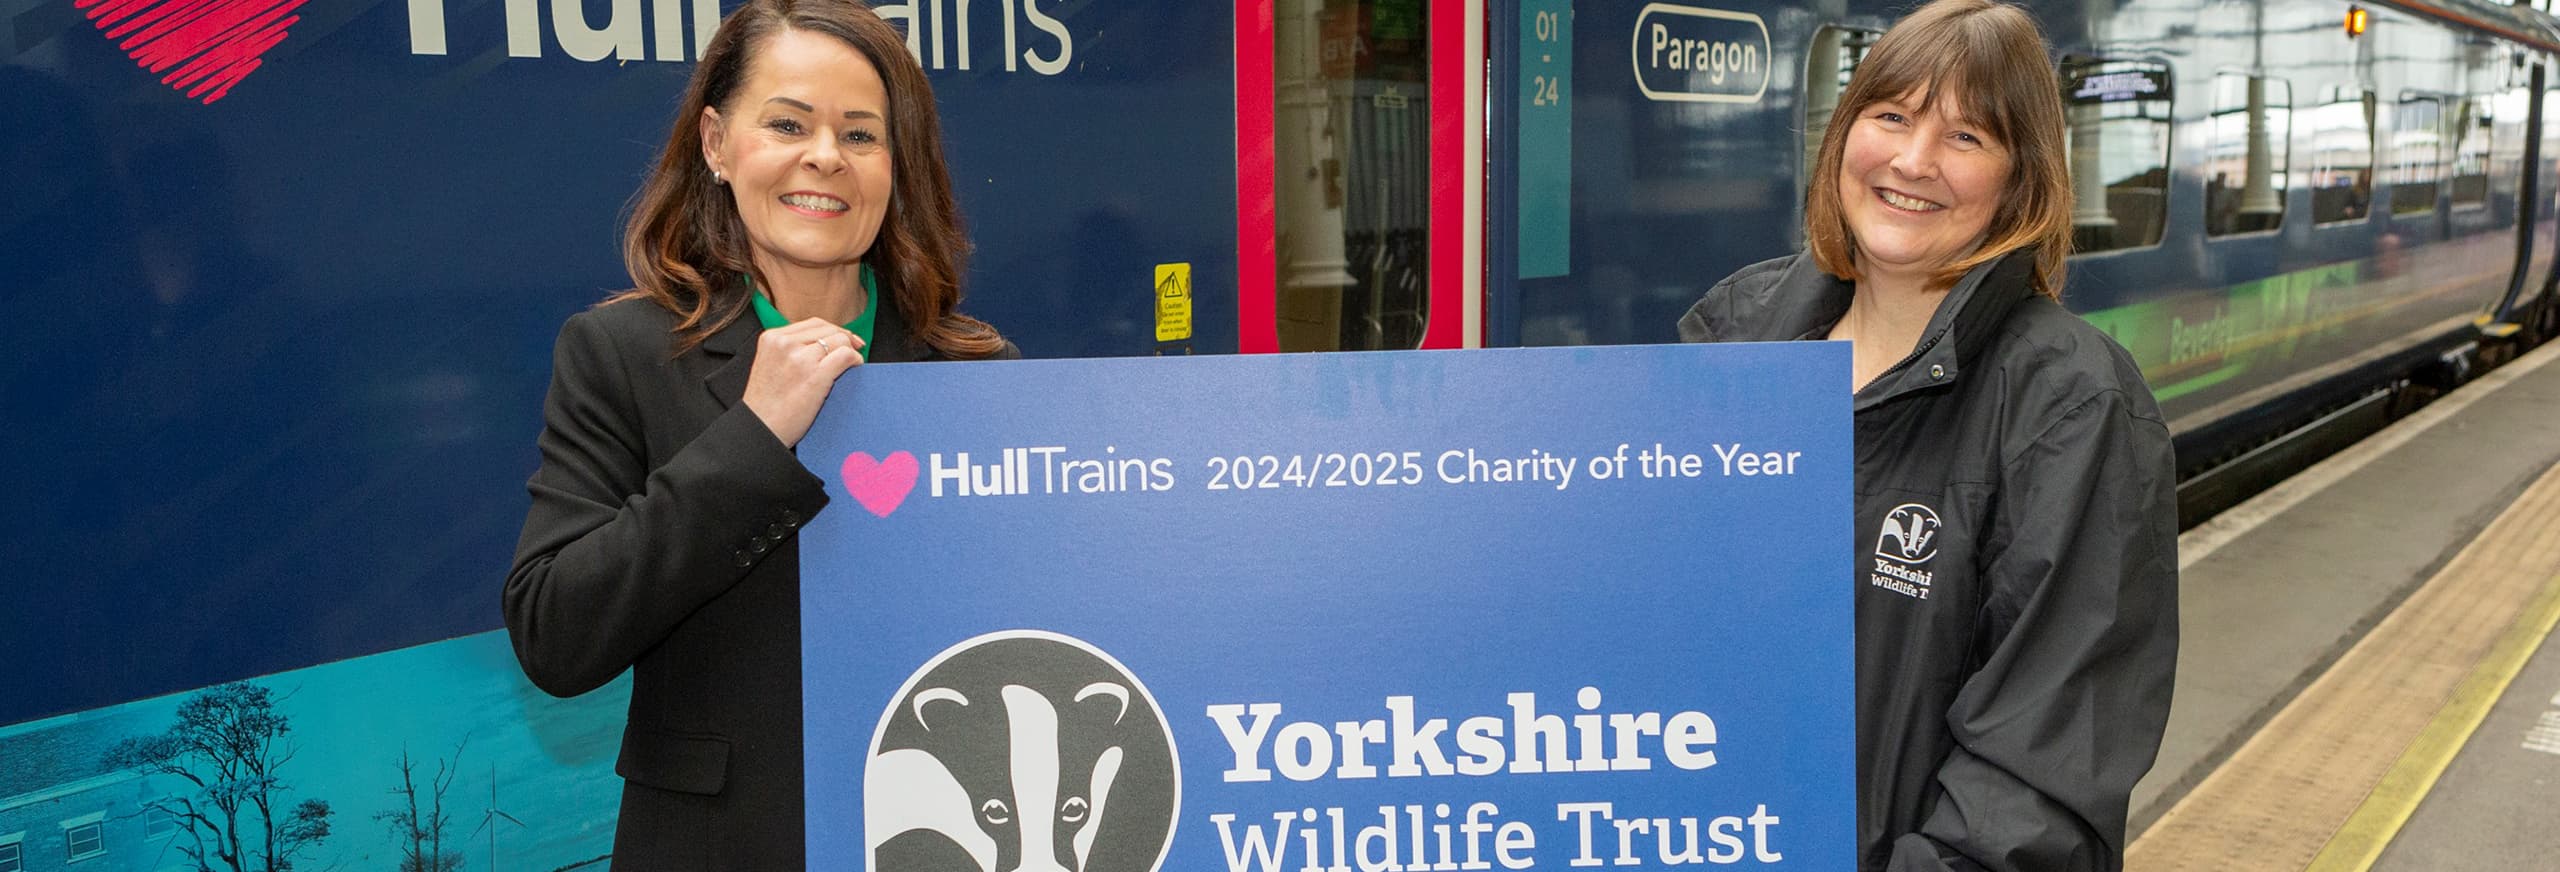 Hull Trains Yorkshire Wildlife Trust partnership